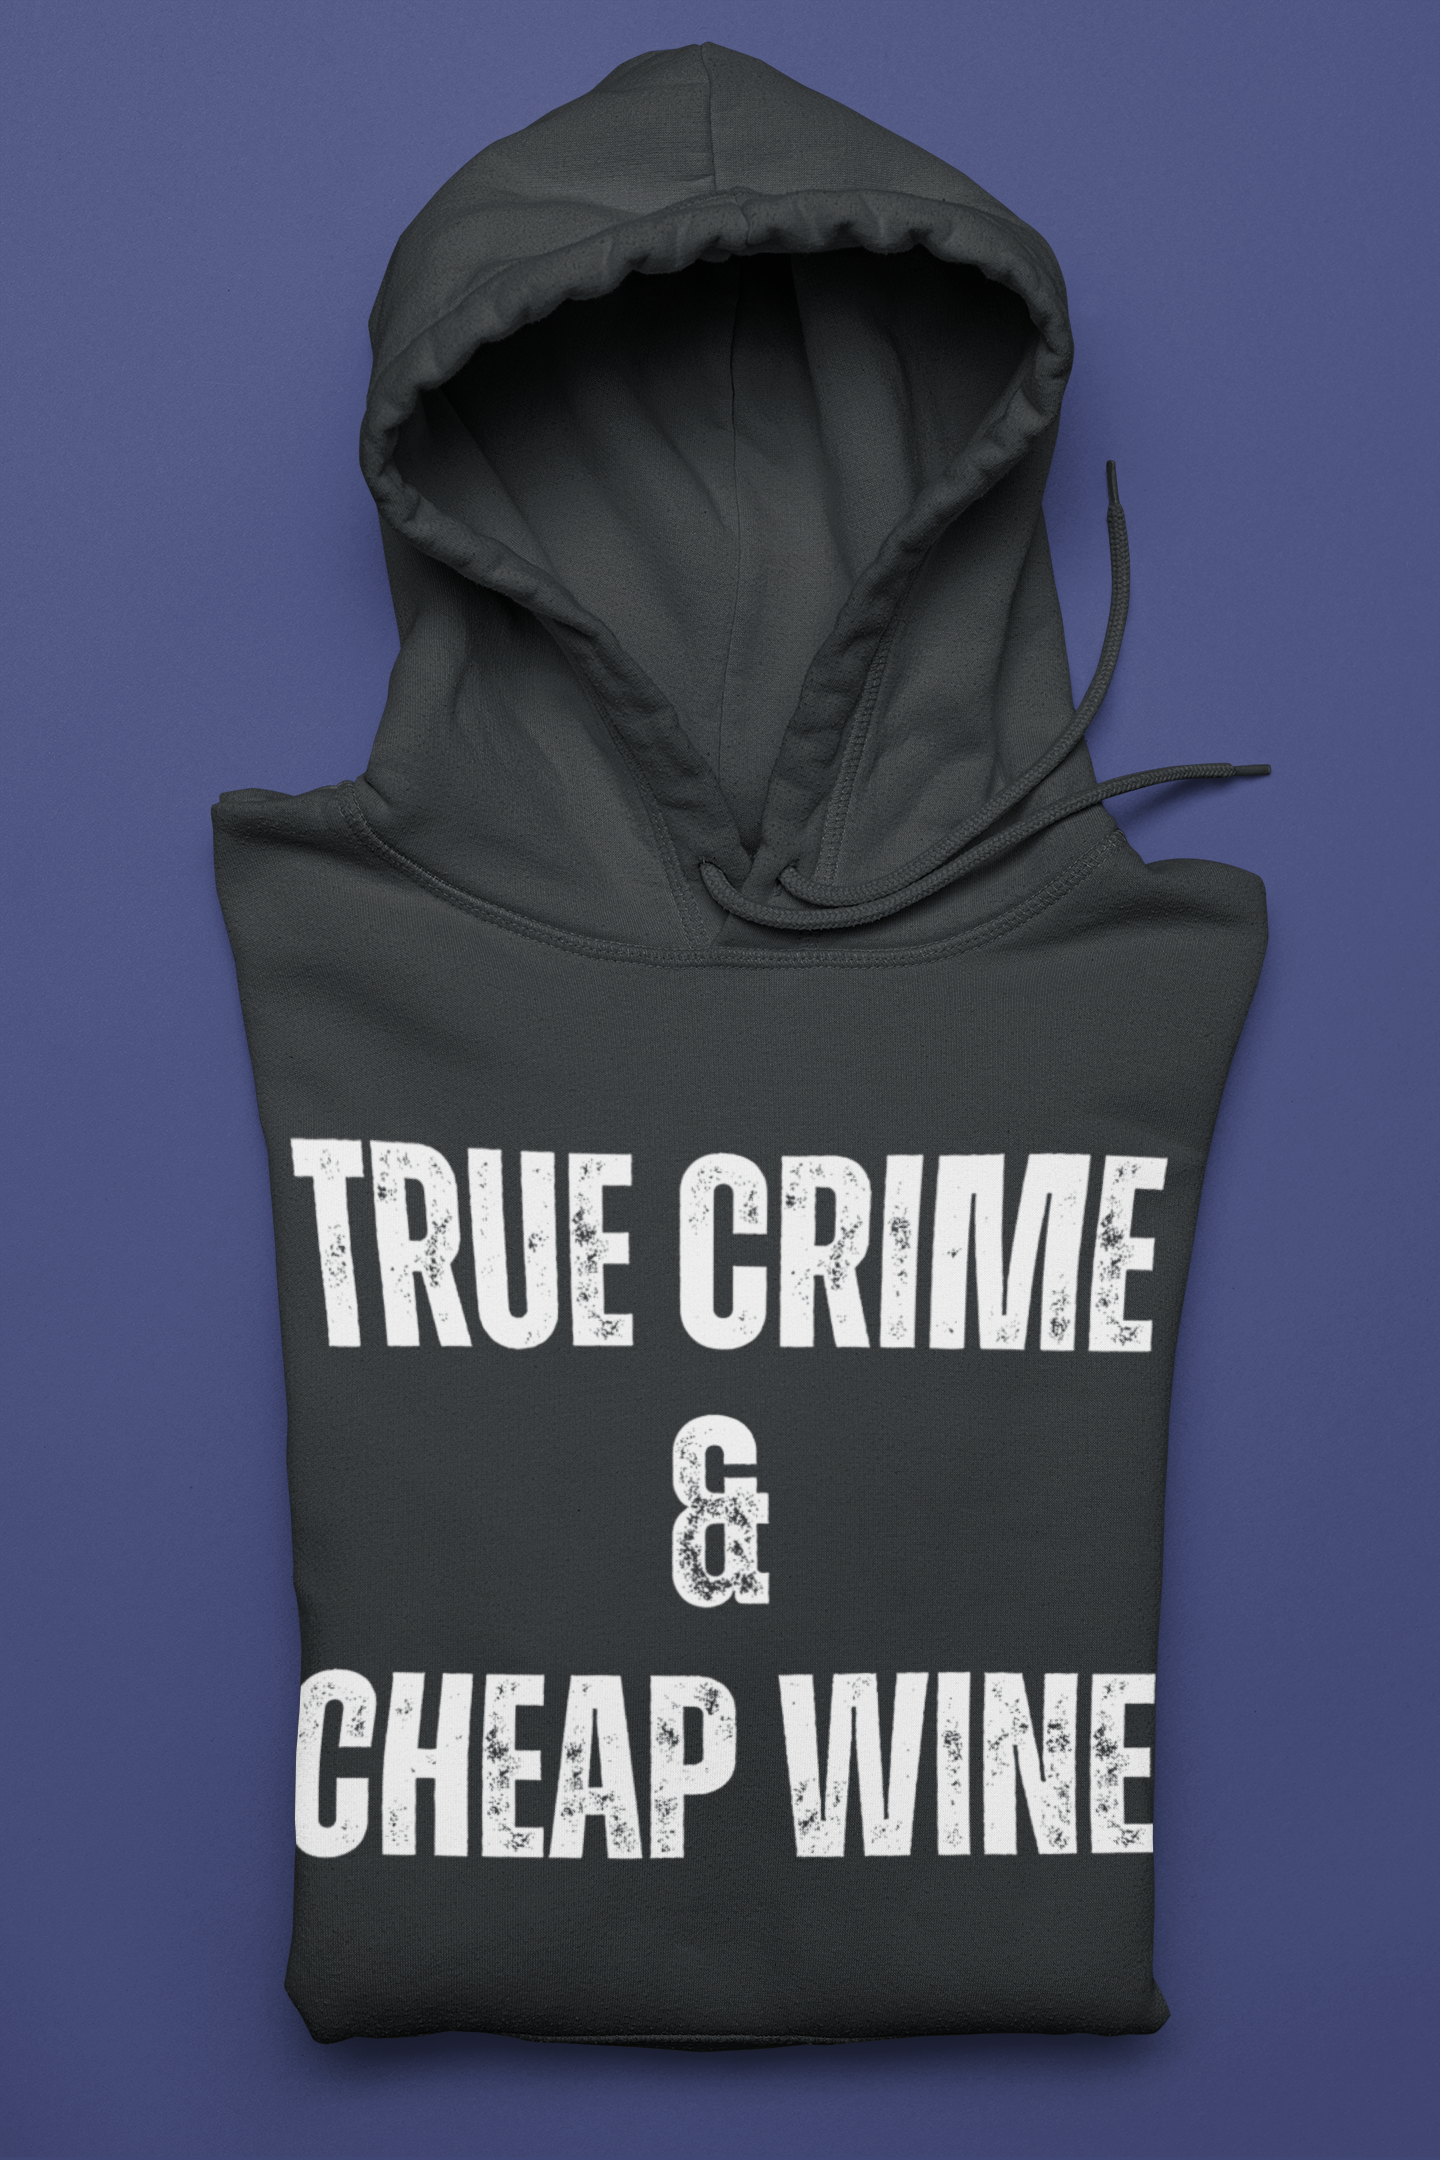 True Crime & Cheap Wine Hoodie